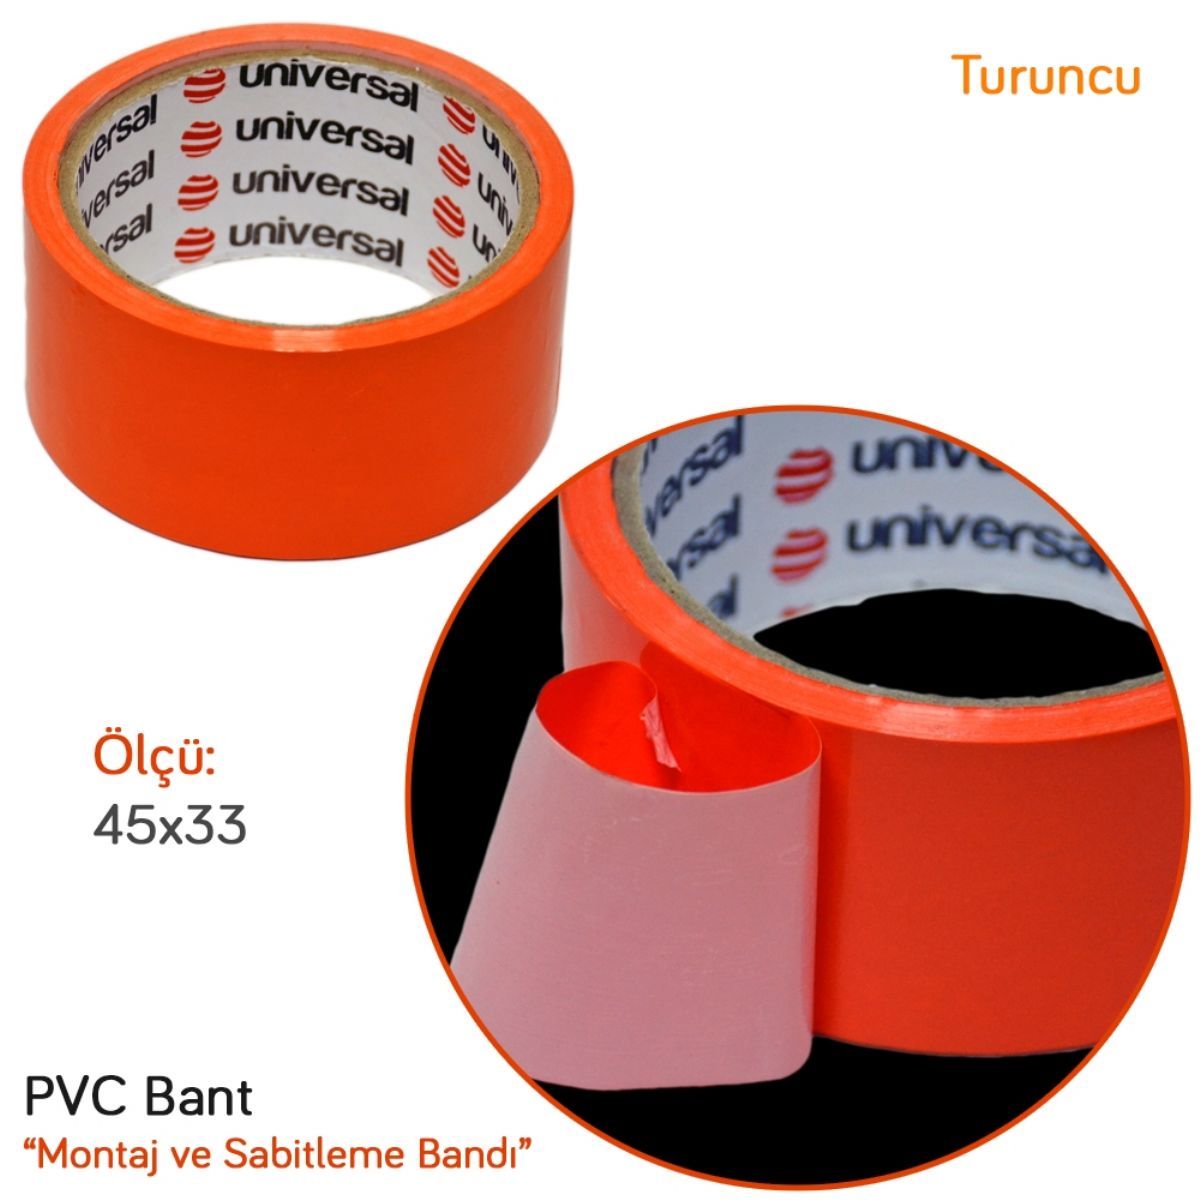 PVC Bant | NYF Üniversal Montaj Sabitleme PVC Bant Turuncu 45x33 U0305 | 340-20-00001 |  | 